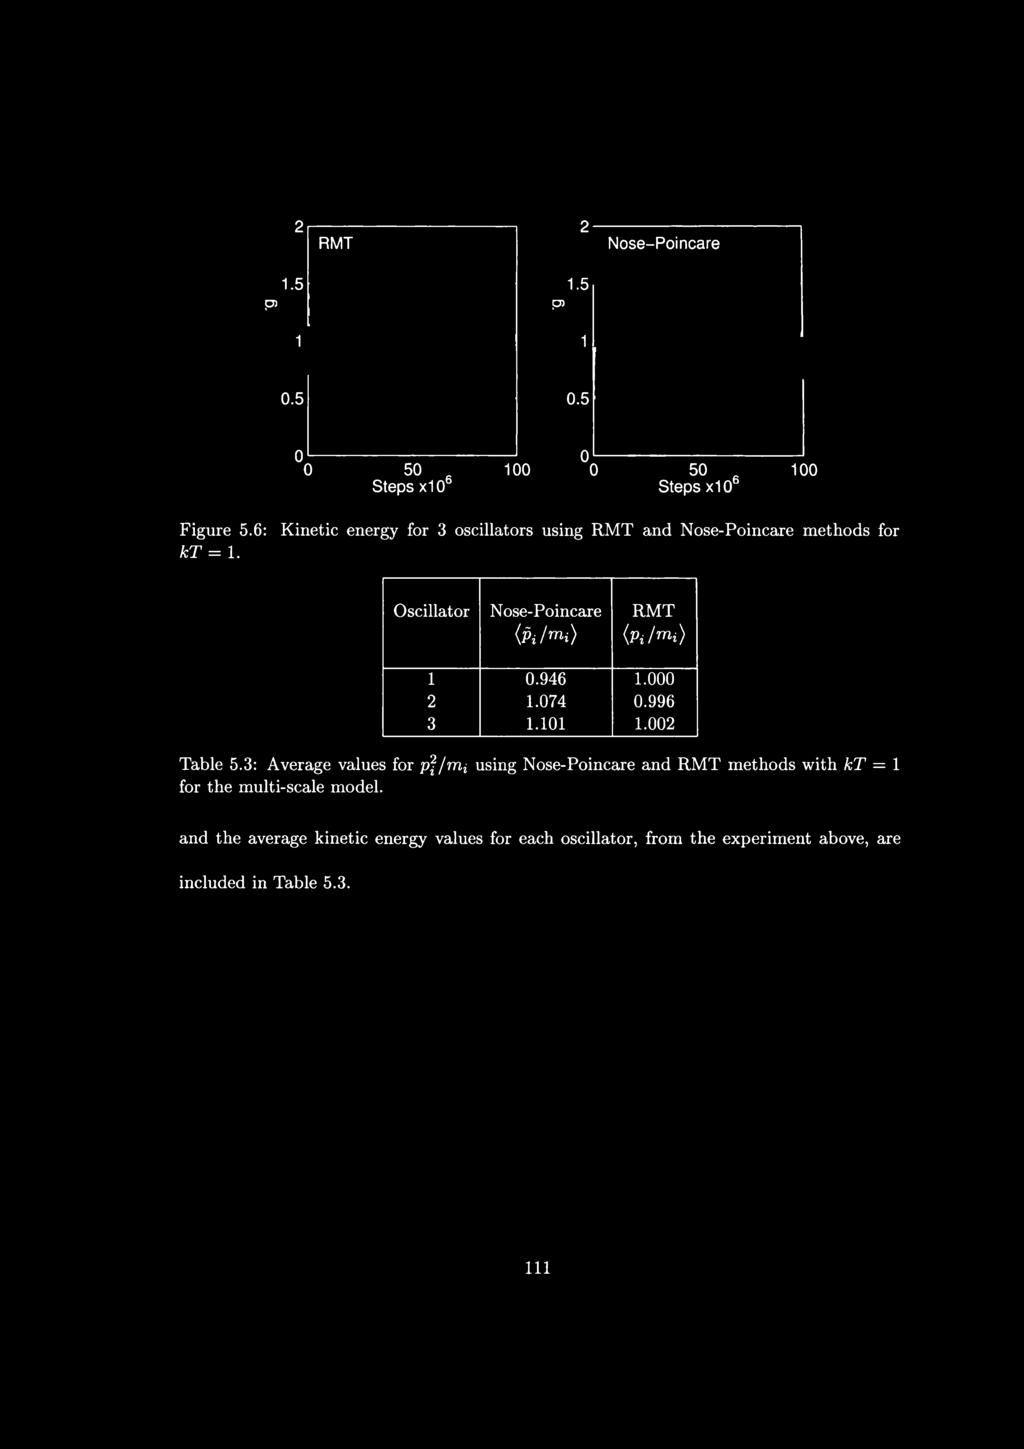 Oscillator Nose-Poincare RMT {Pi/mi) (Pi/mi) 1 0.946 1.000 2 1.074 0.996 3 1.101 1.002 Table 5.